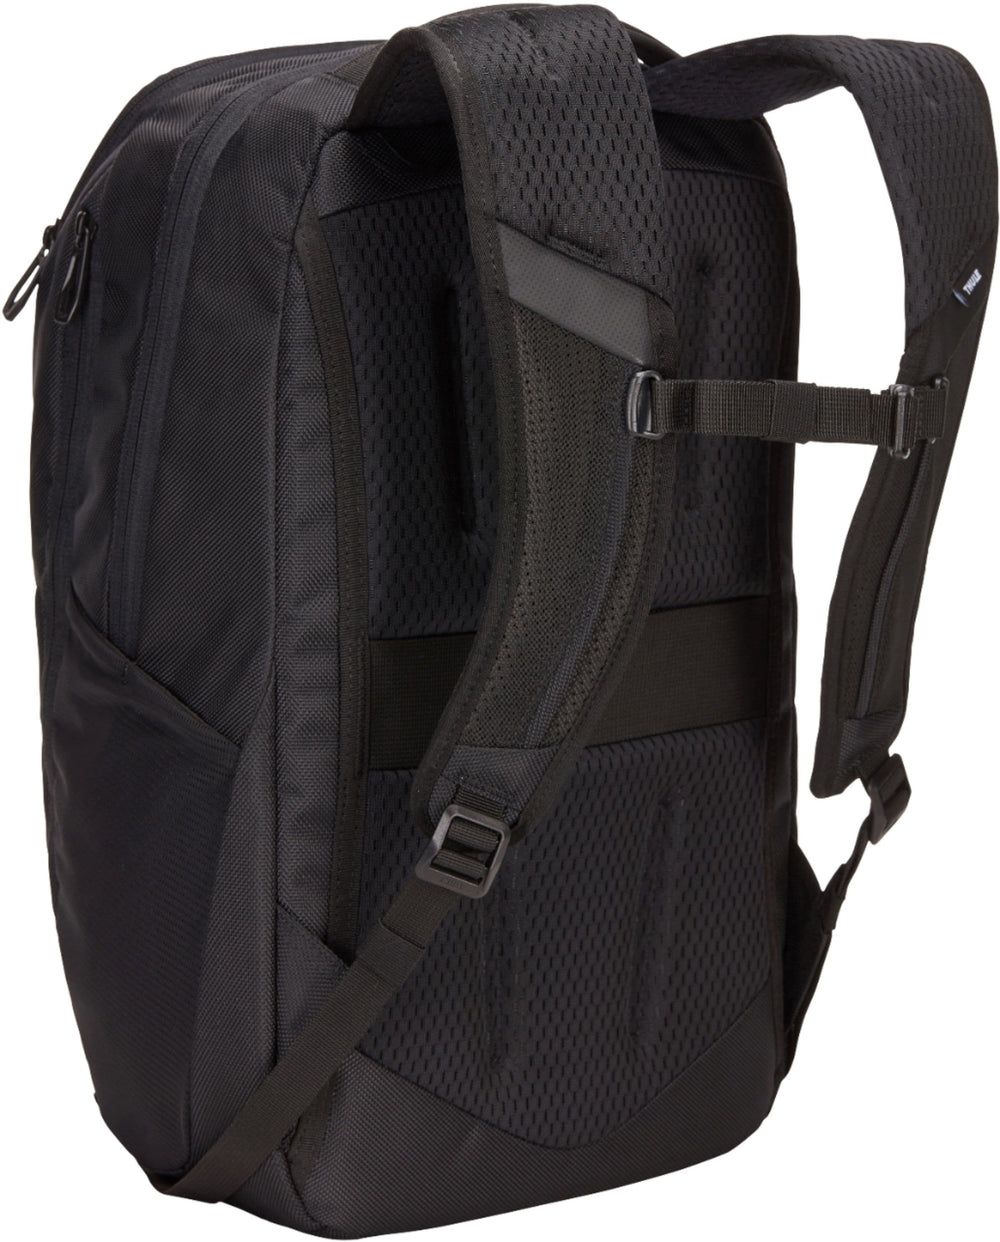 Thule - Accent Backpack 23L Bundle for 15.6" Laptop w/ Subterra PowerShuttle, 10" Tablet Sleeve, SafeZone, & Water Bottle Holder - Black_1